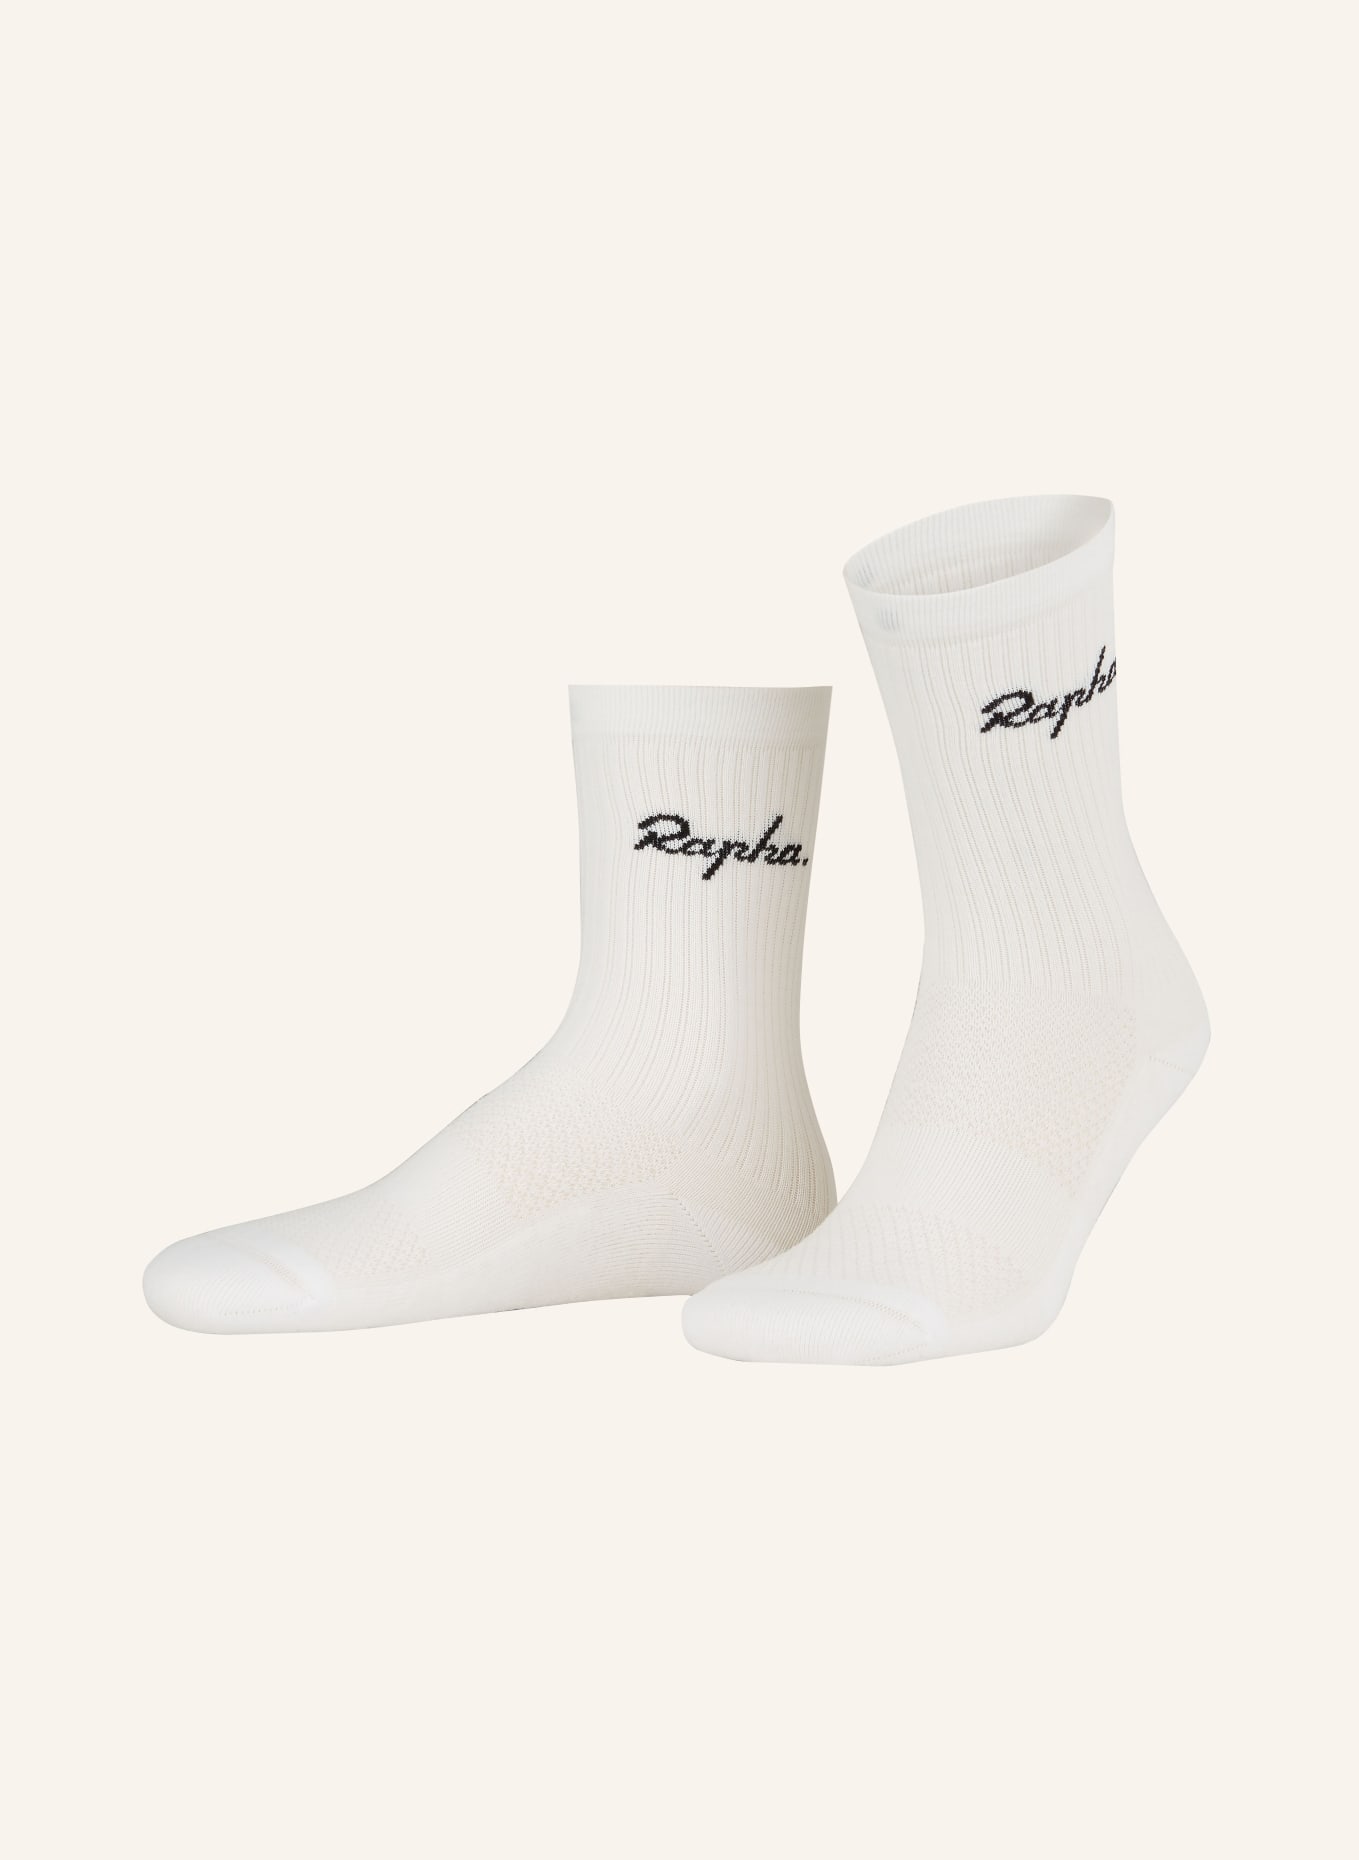 Rapha Socken COTTON CREW, Farbe: WHB WHITE/BLACK (Bild 1)